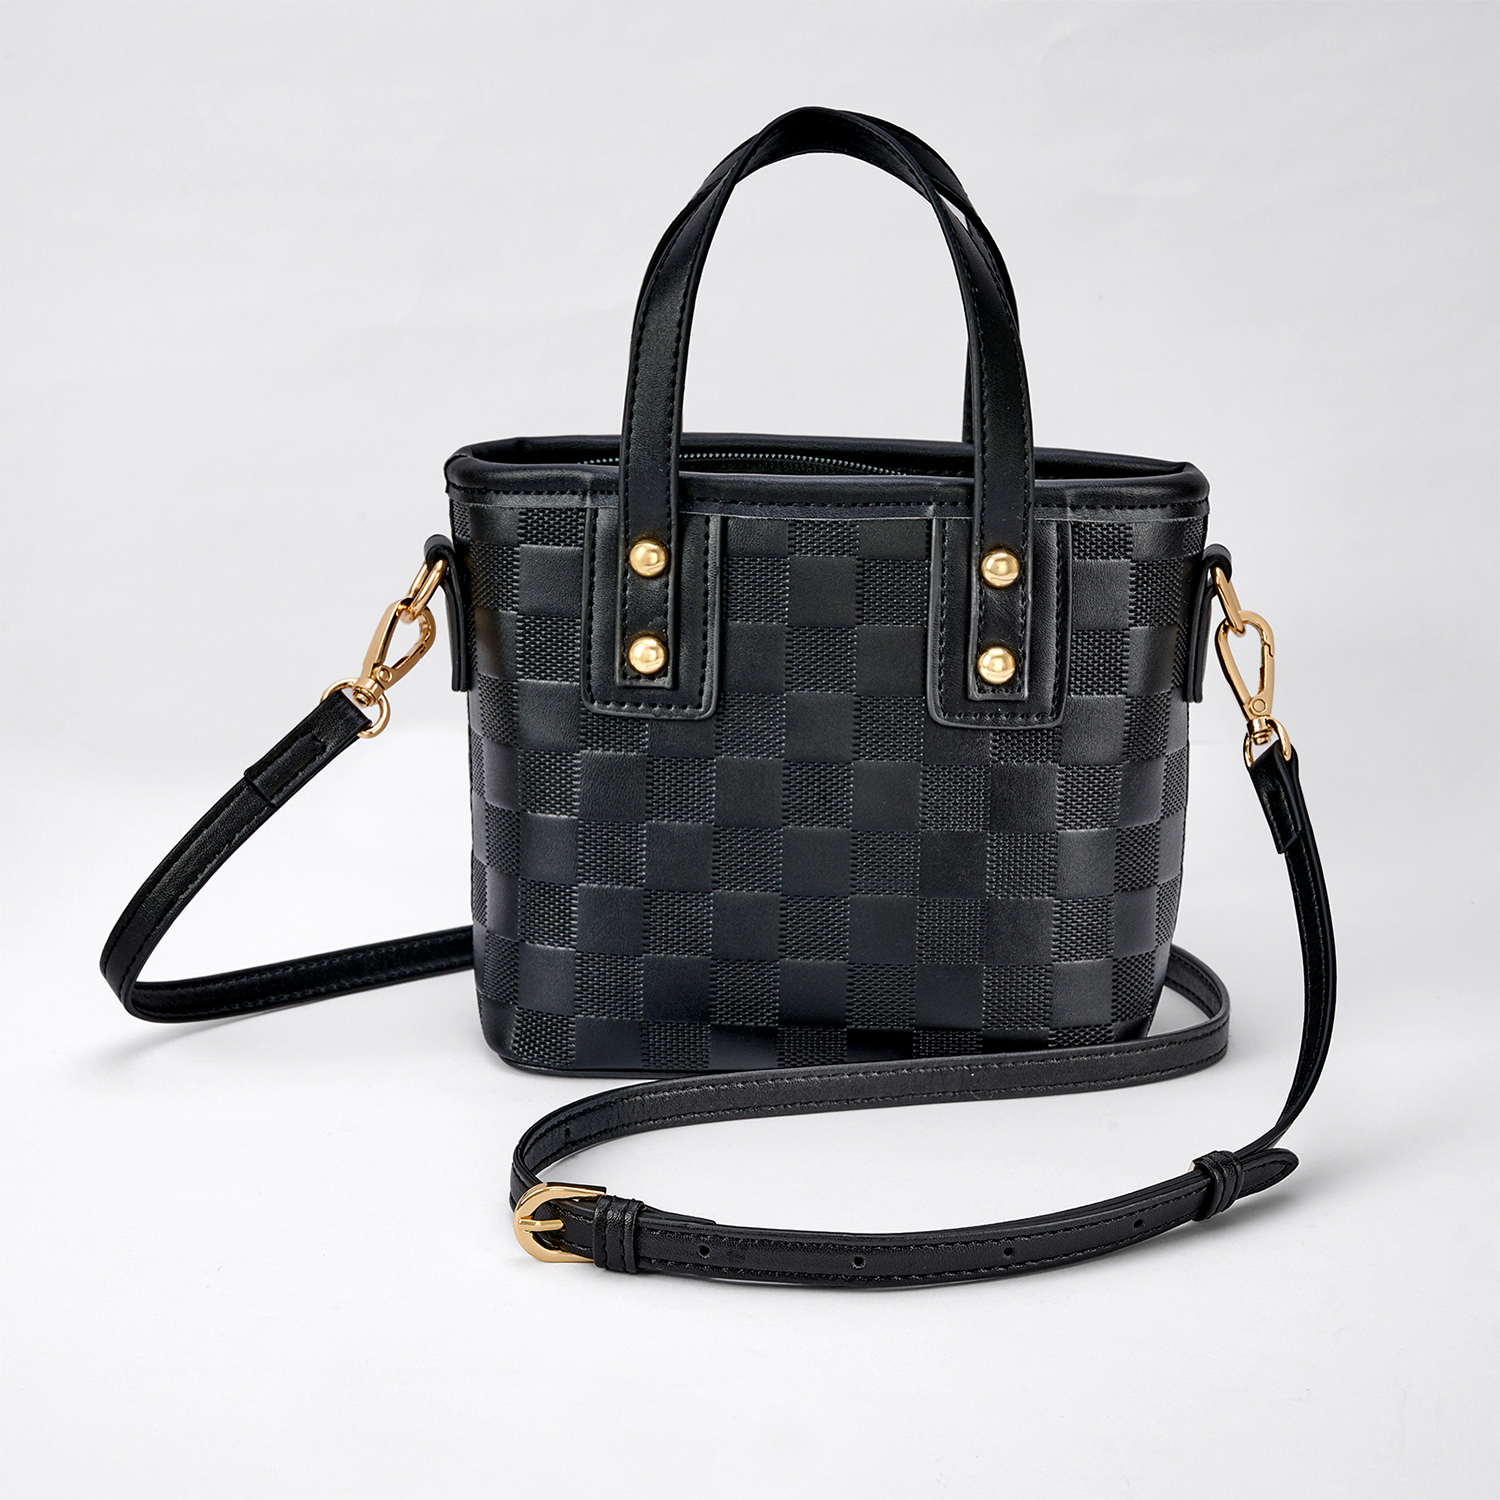 ESUPPORT Purse Straps Replacement Leather Handbags Shoulder Bag Wallet DIY  23.62 Inch Long (Black)